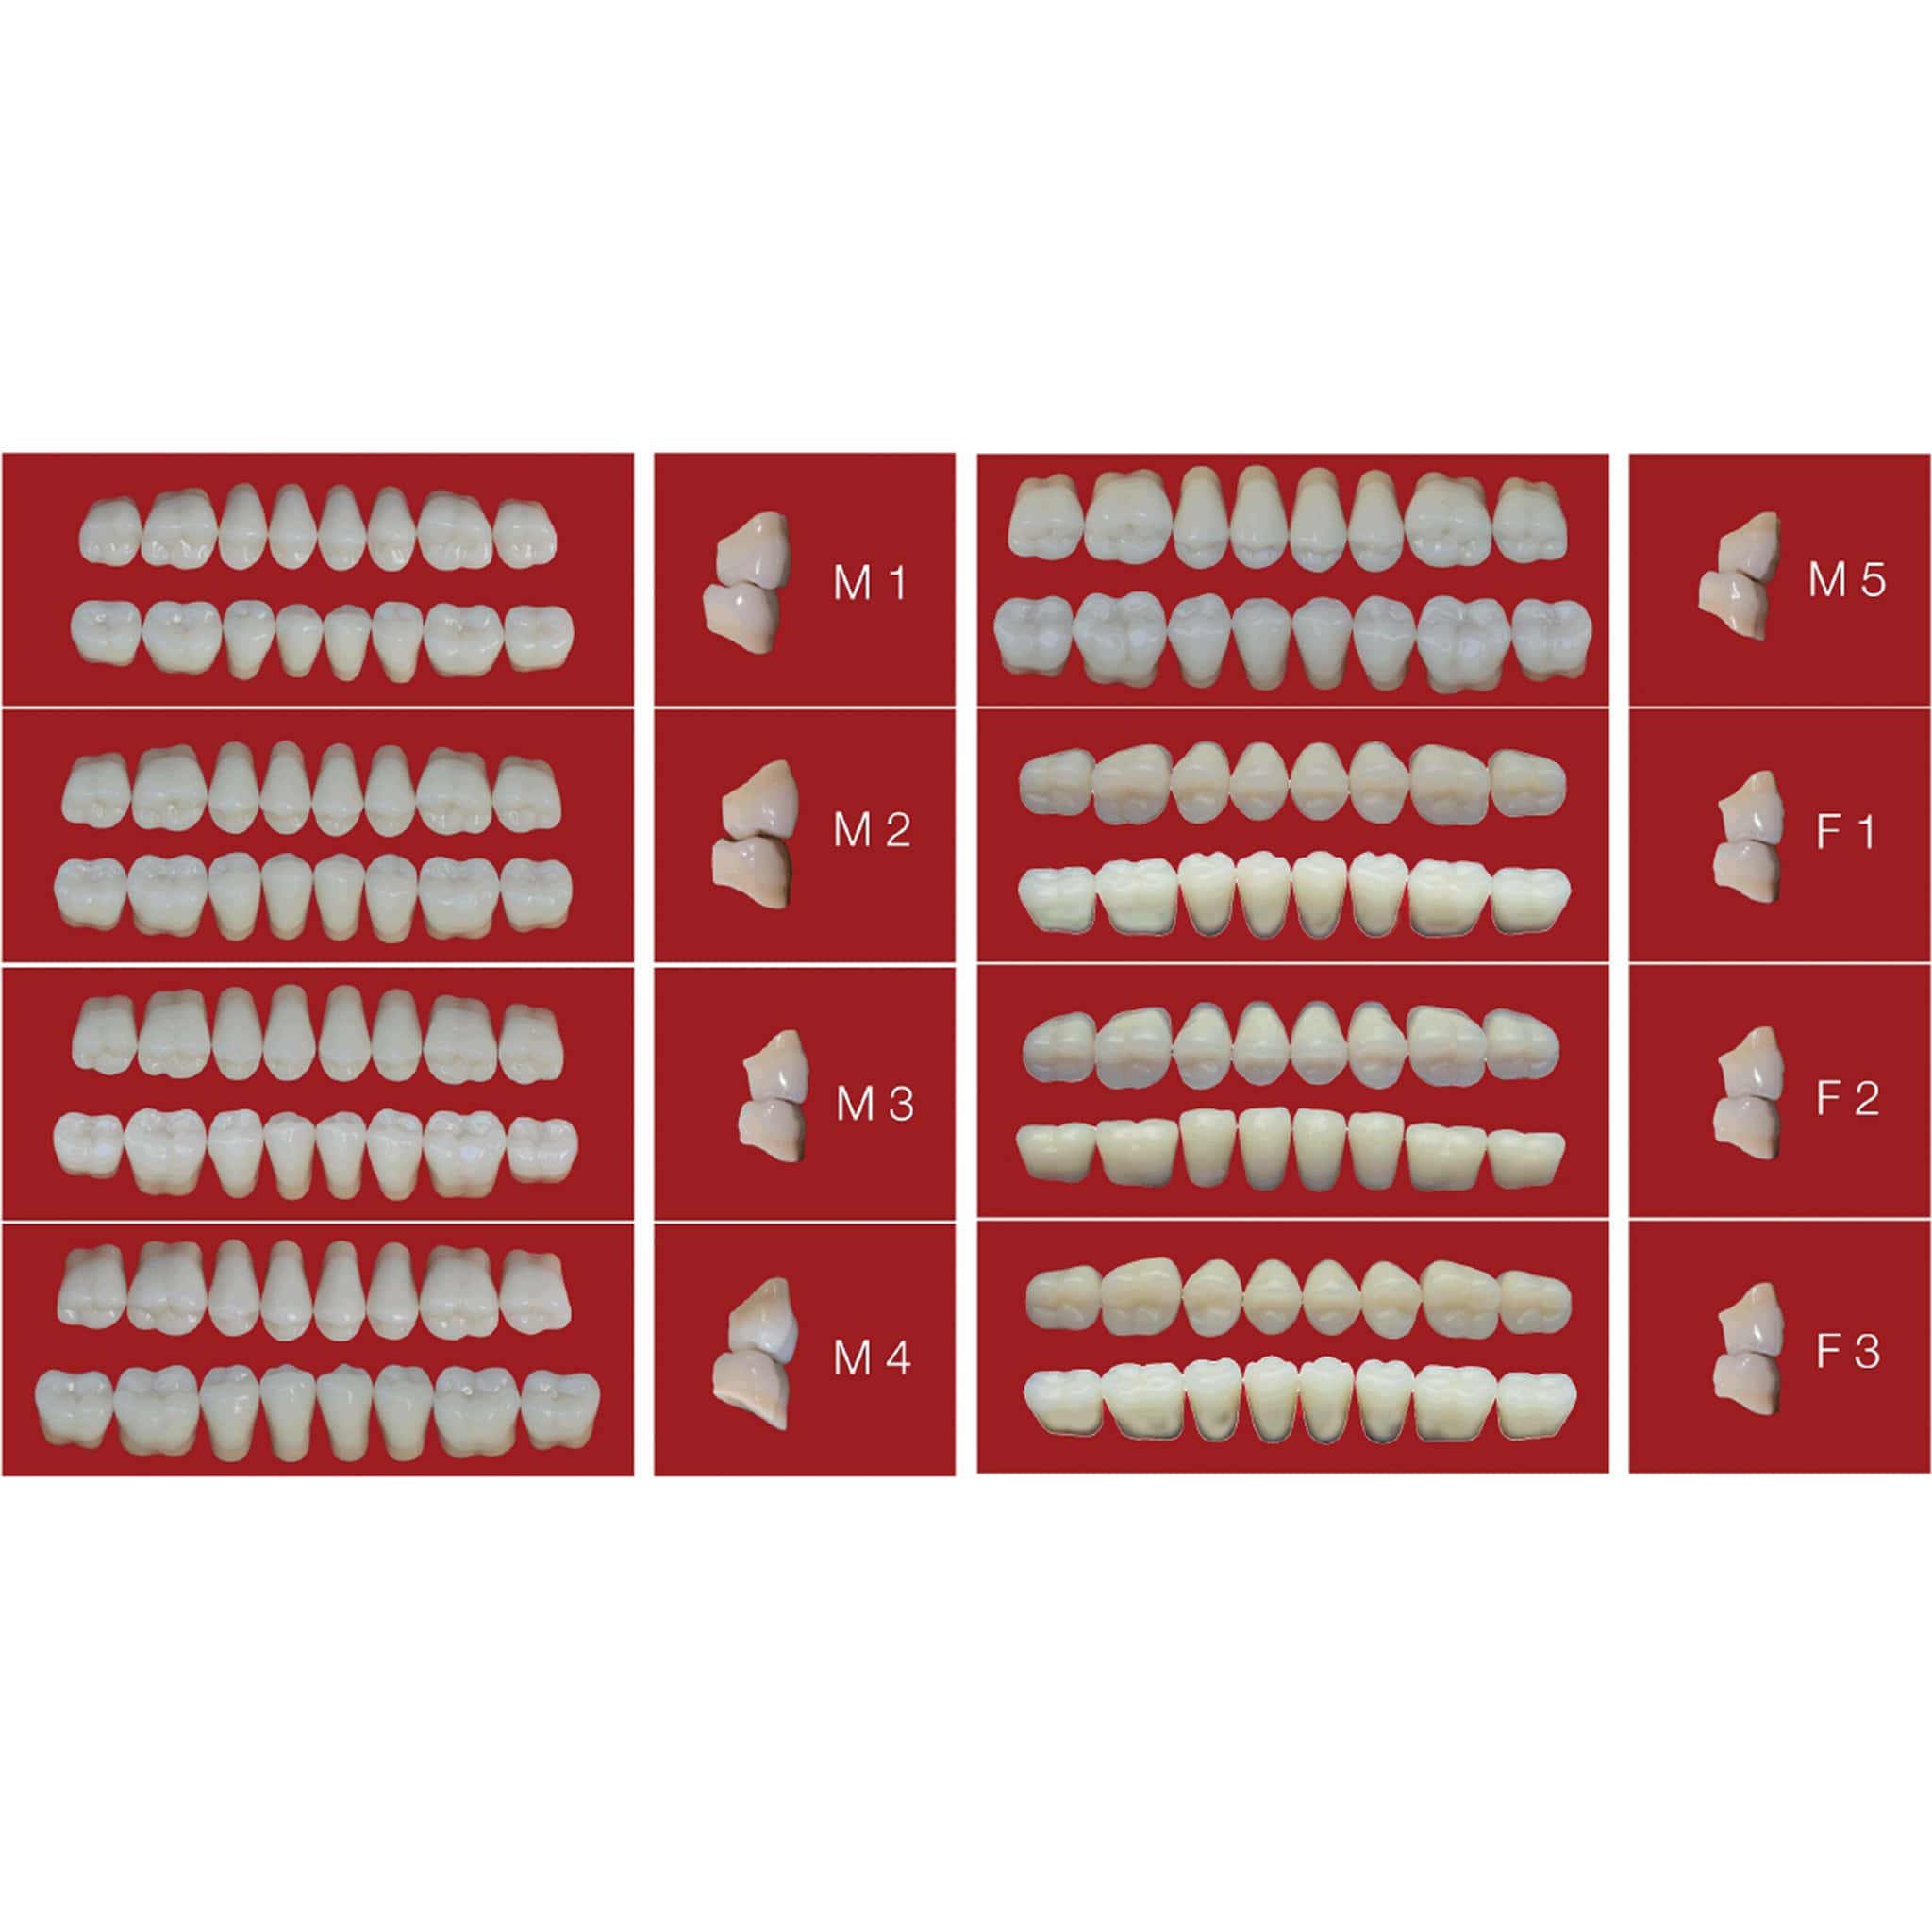 MR Dental Medi-Lux Full Set B1 Shade (Box of 4)